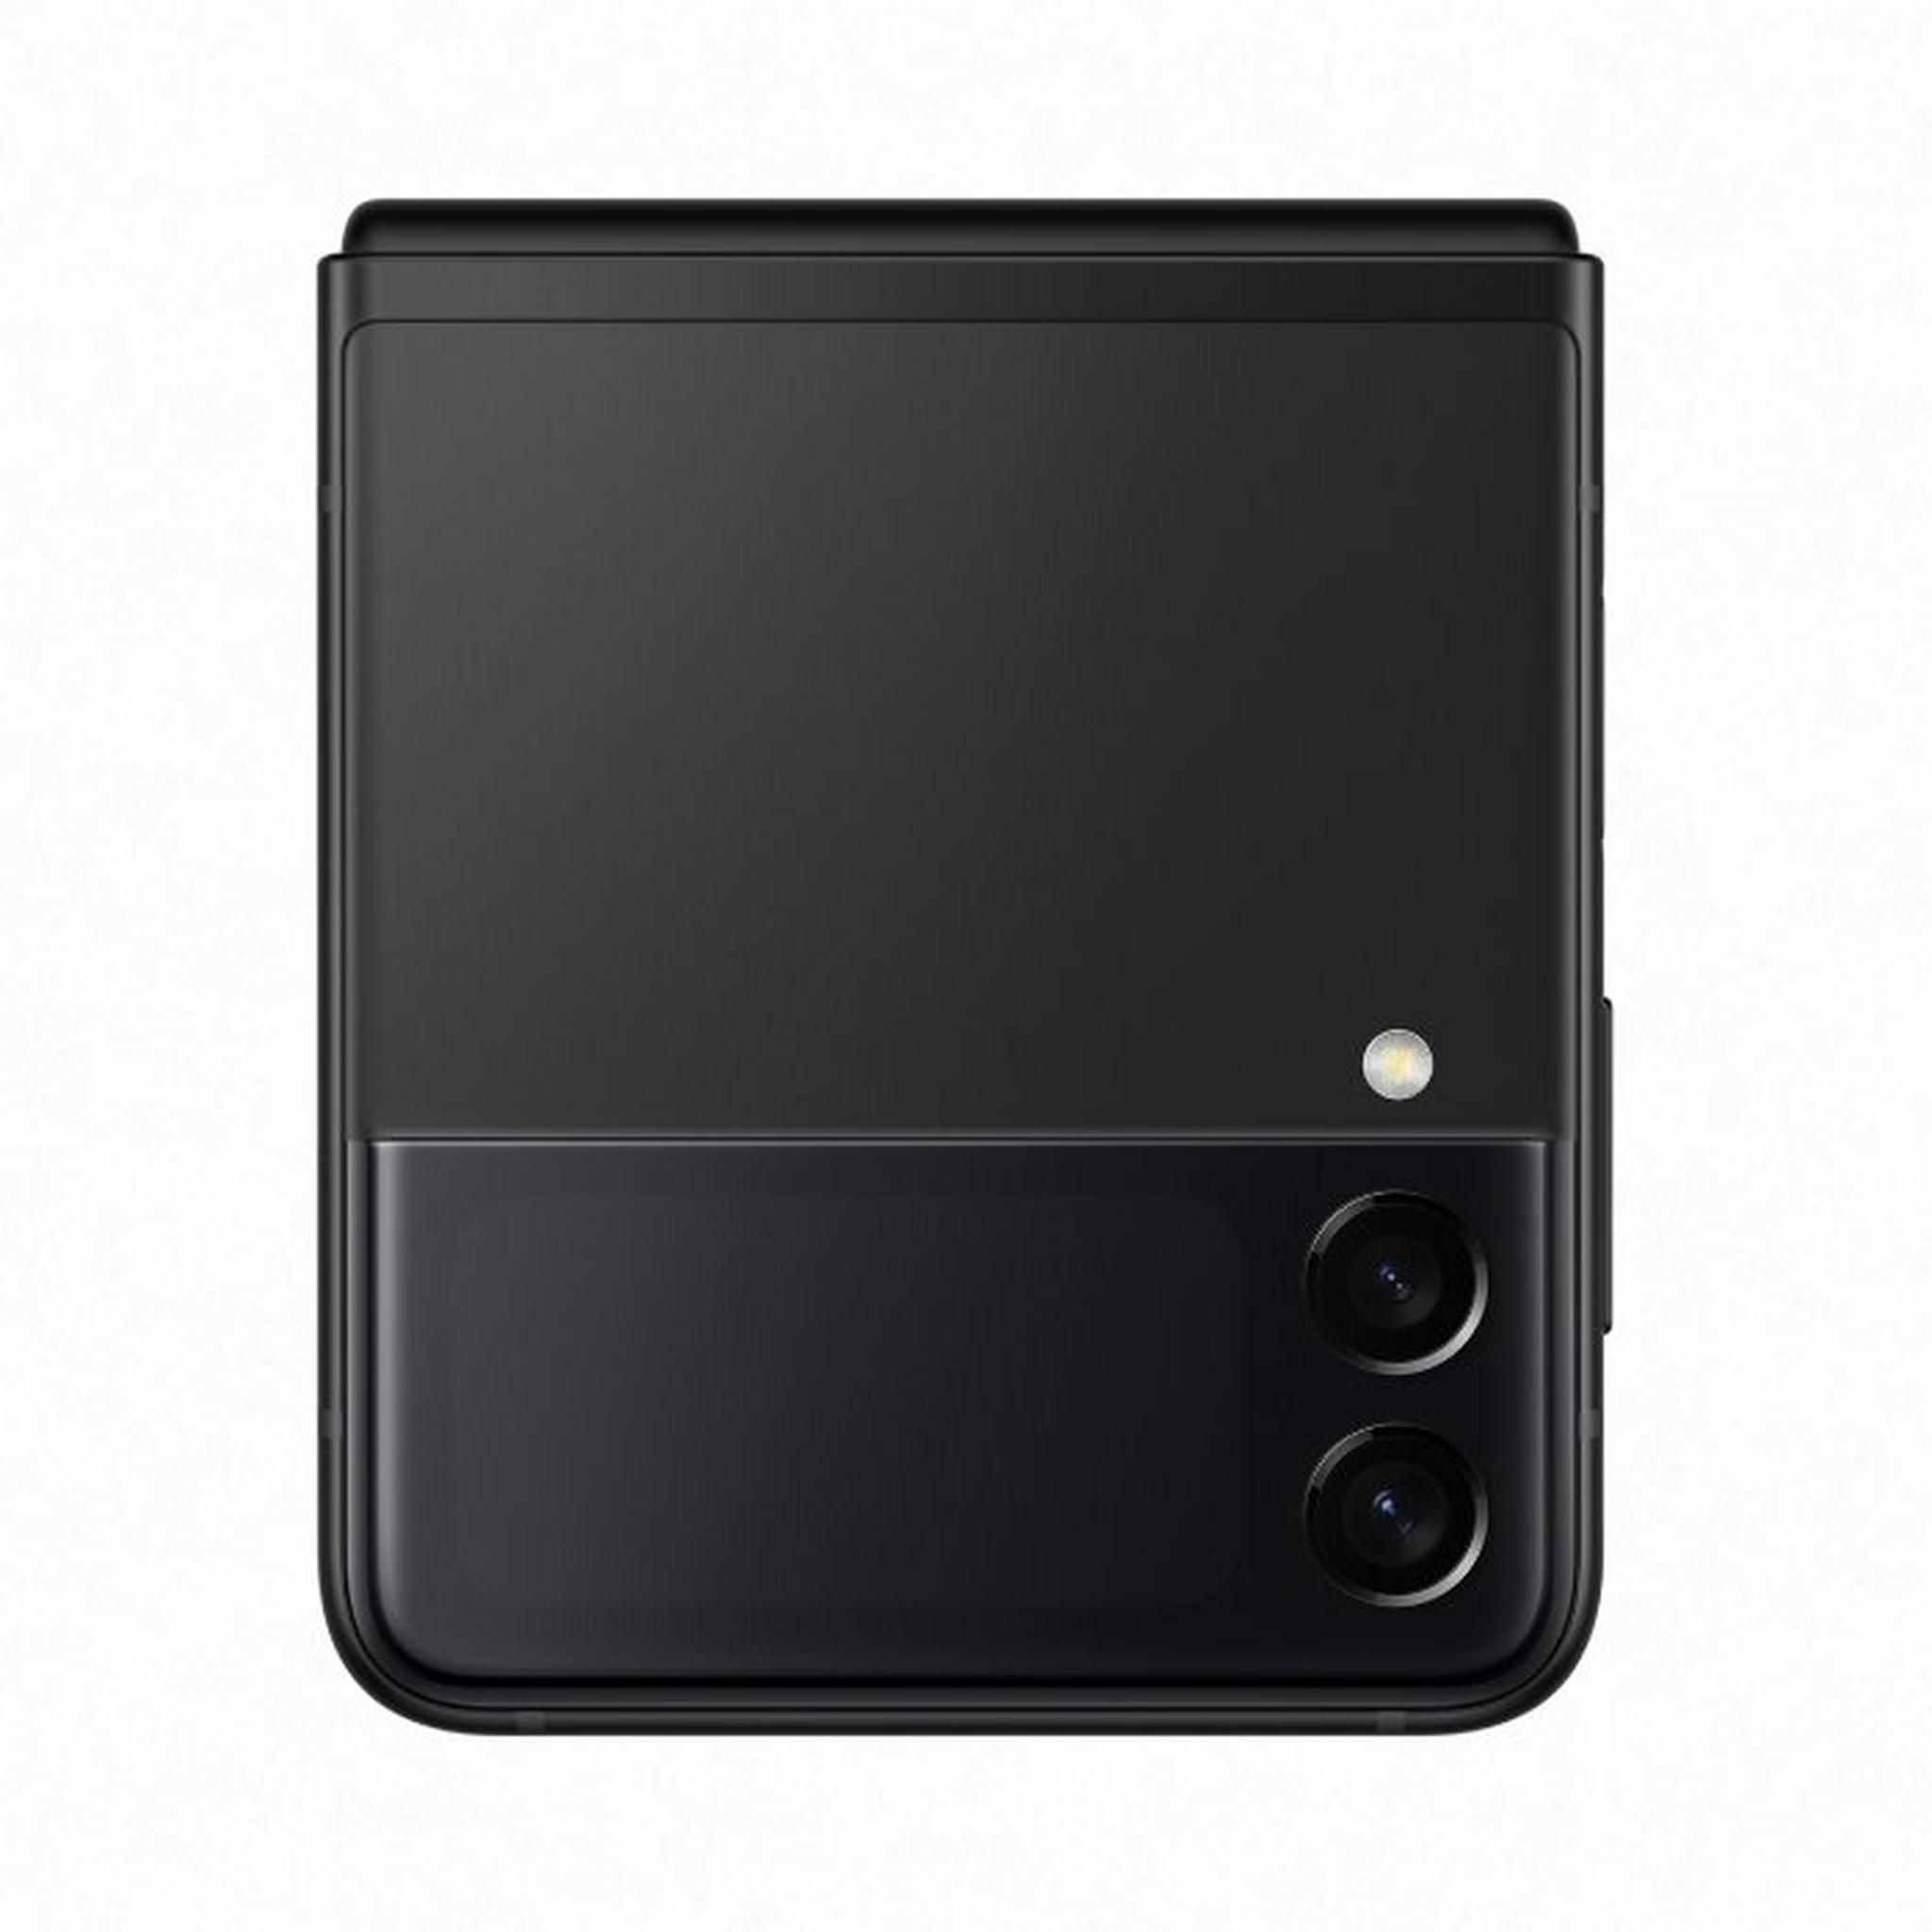 Samsung Galaxy Z Flip 3 5G 256GB Phone - Black